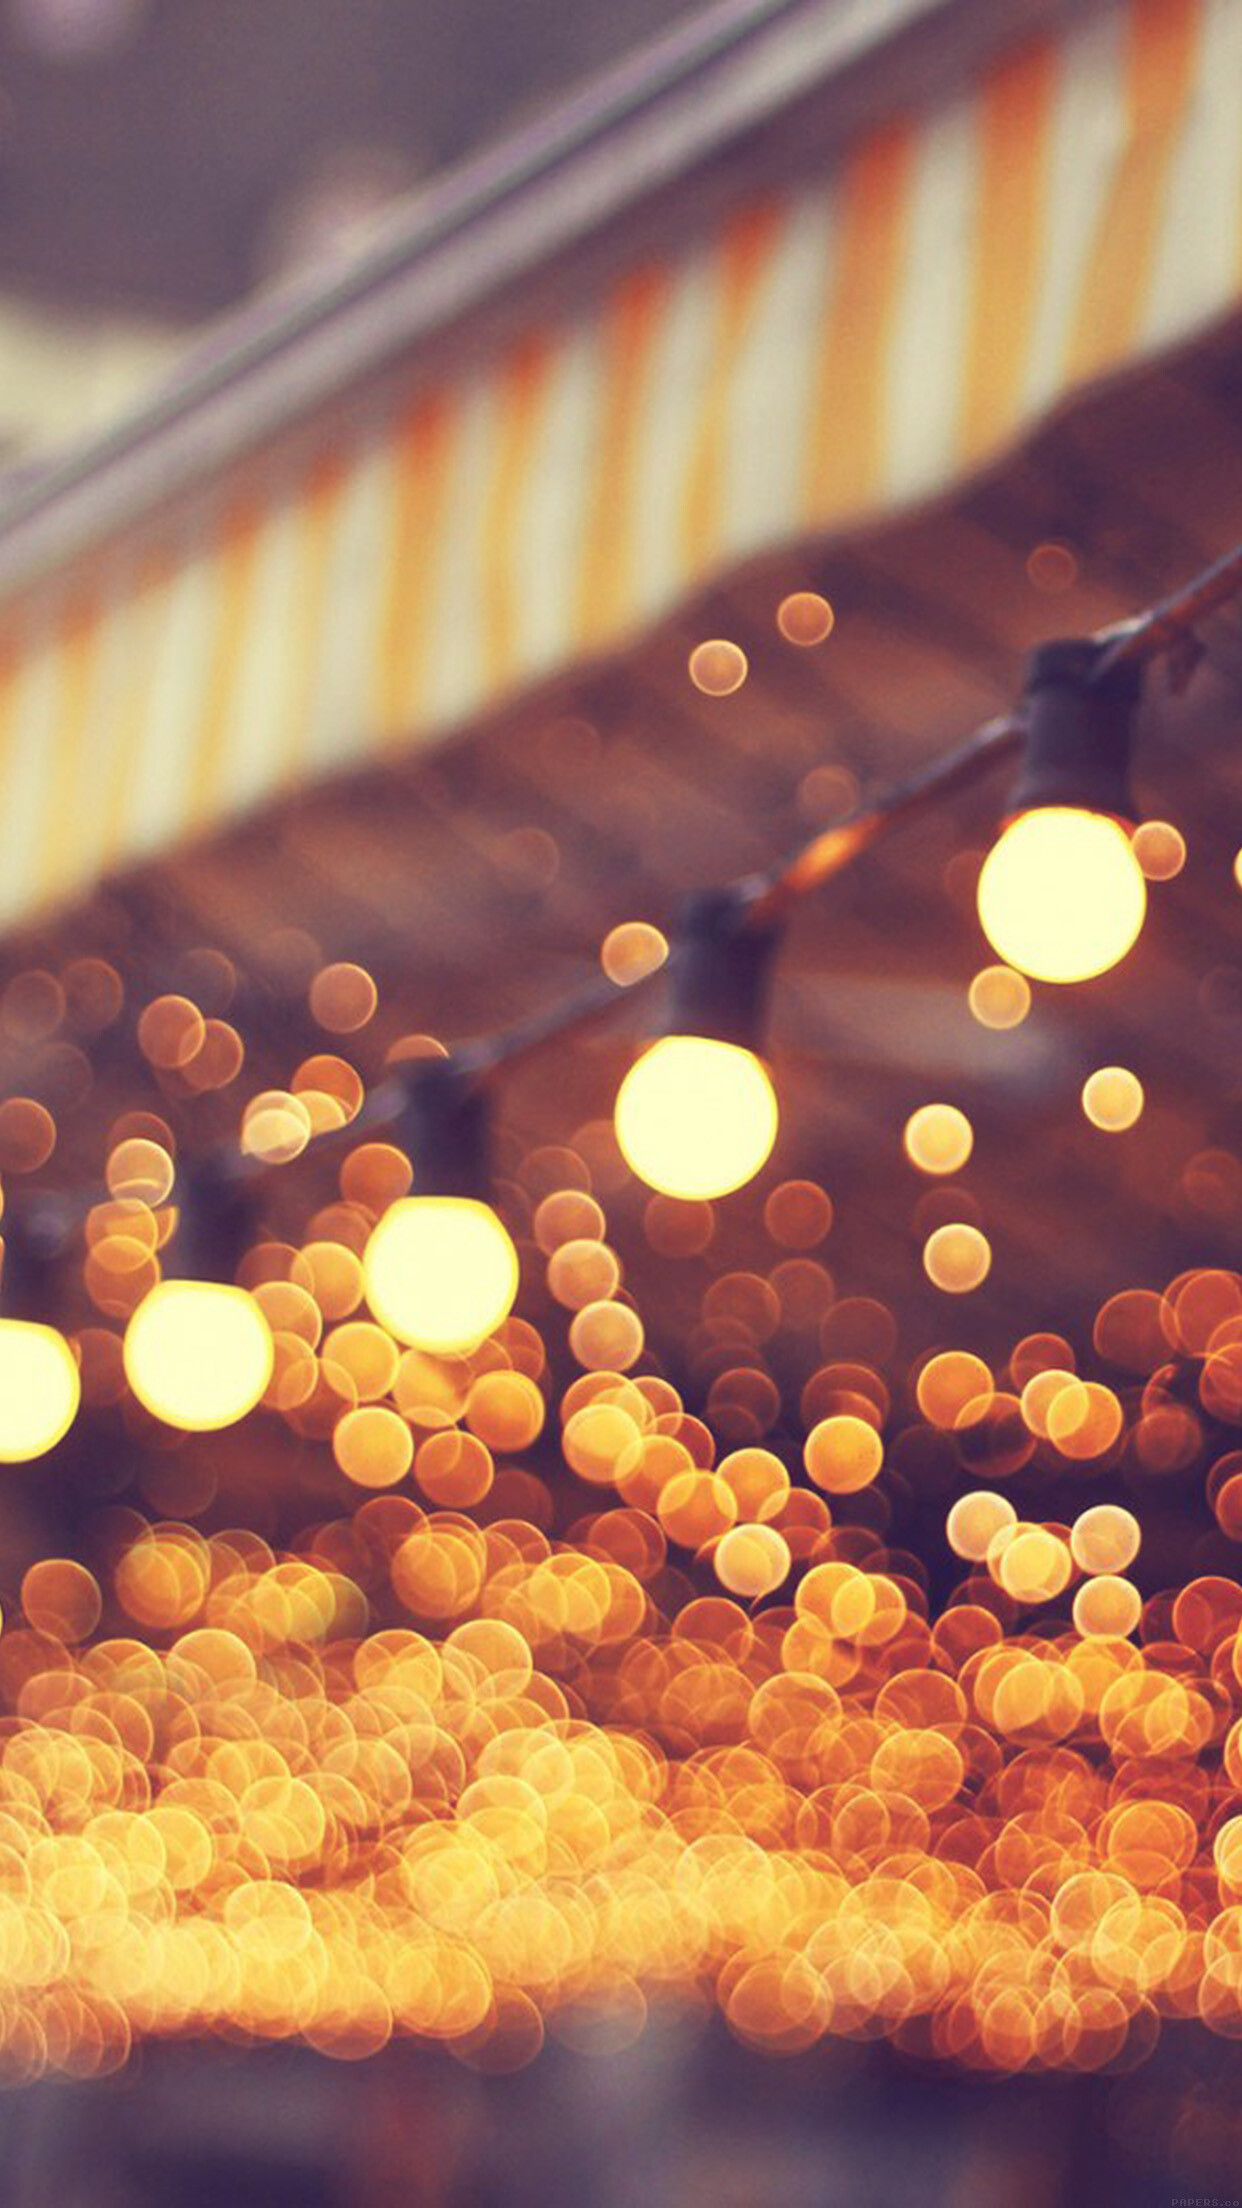 Gold Lights: Bokeh, Hanging lights, Decorative tungsten filament bulbs in an event. 1250x2210 HD Background.